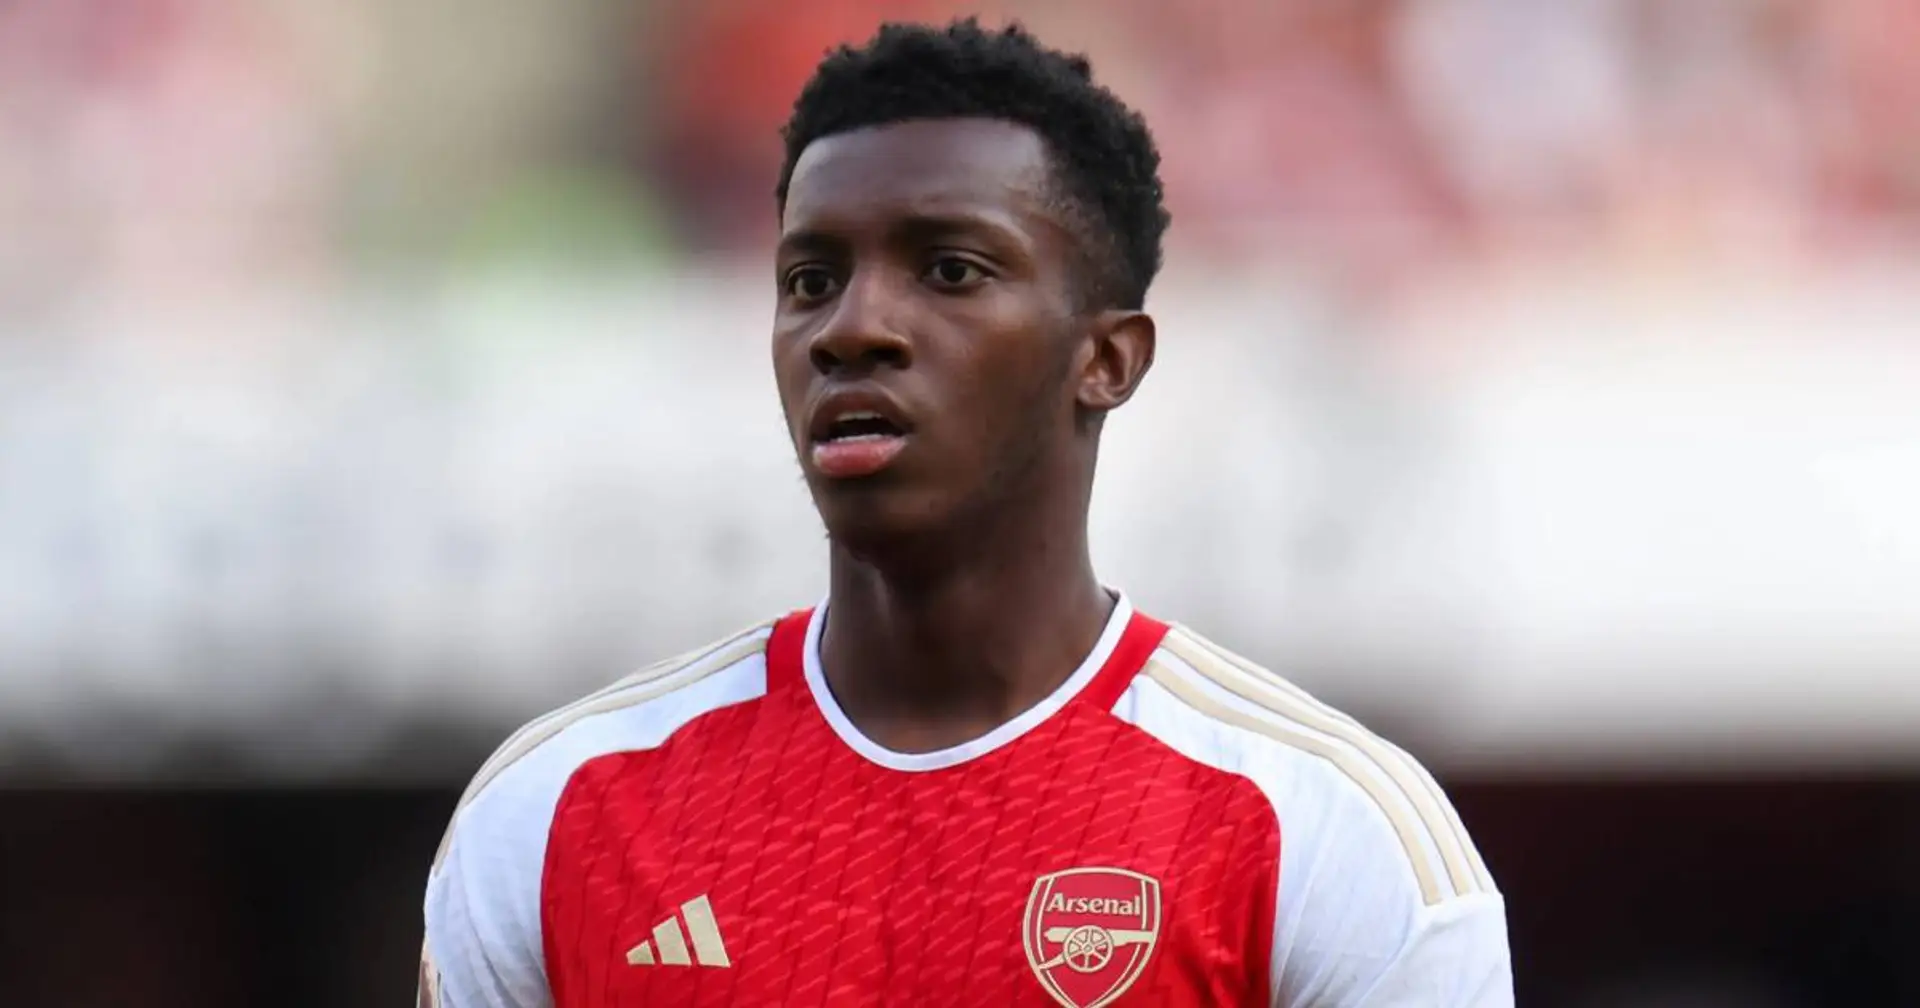 Eddie Nketiah warned he has 'no future' at Arsenal after FA Cup snub